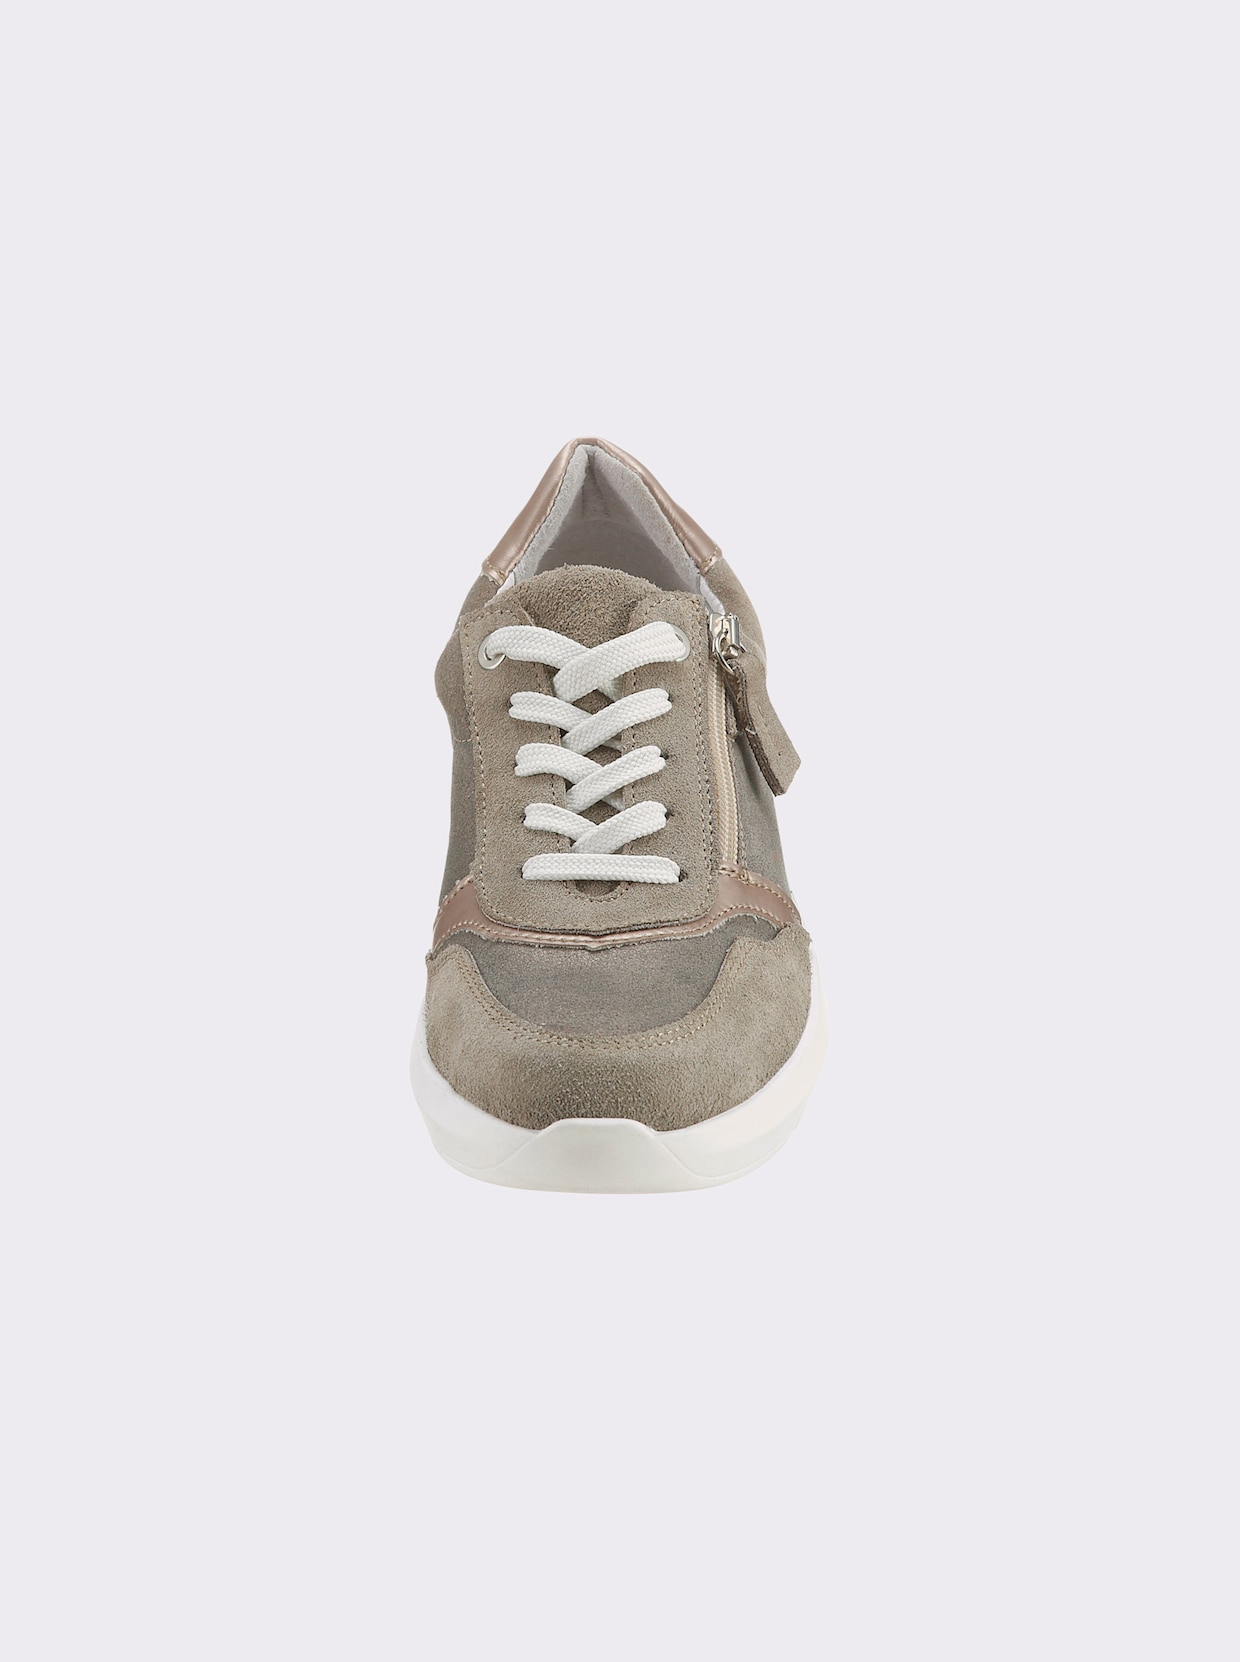 airsoft modern+ Sneaker - kaki